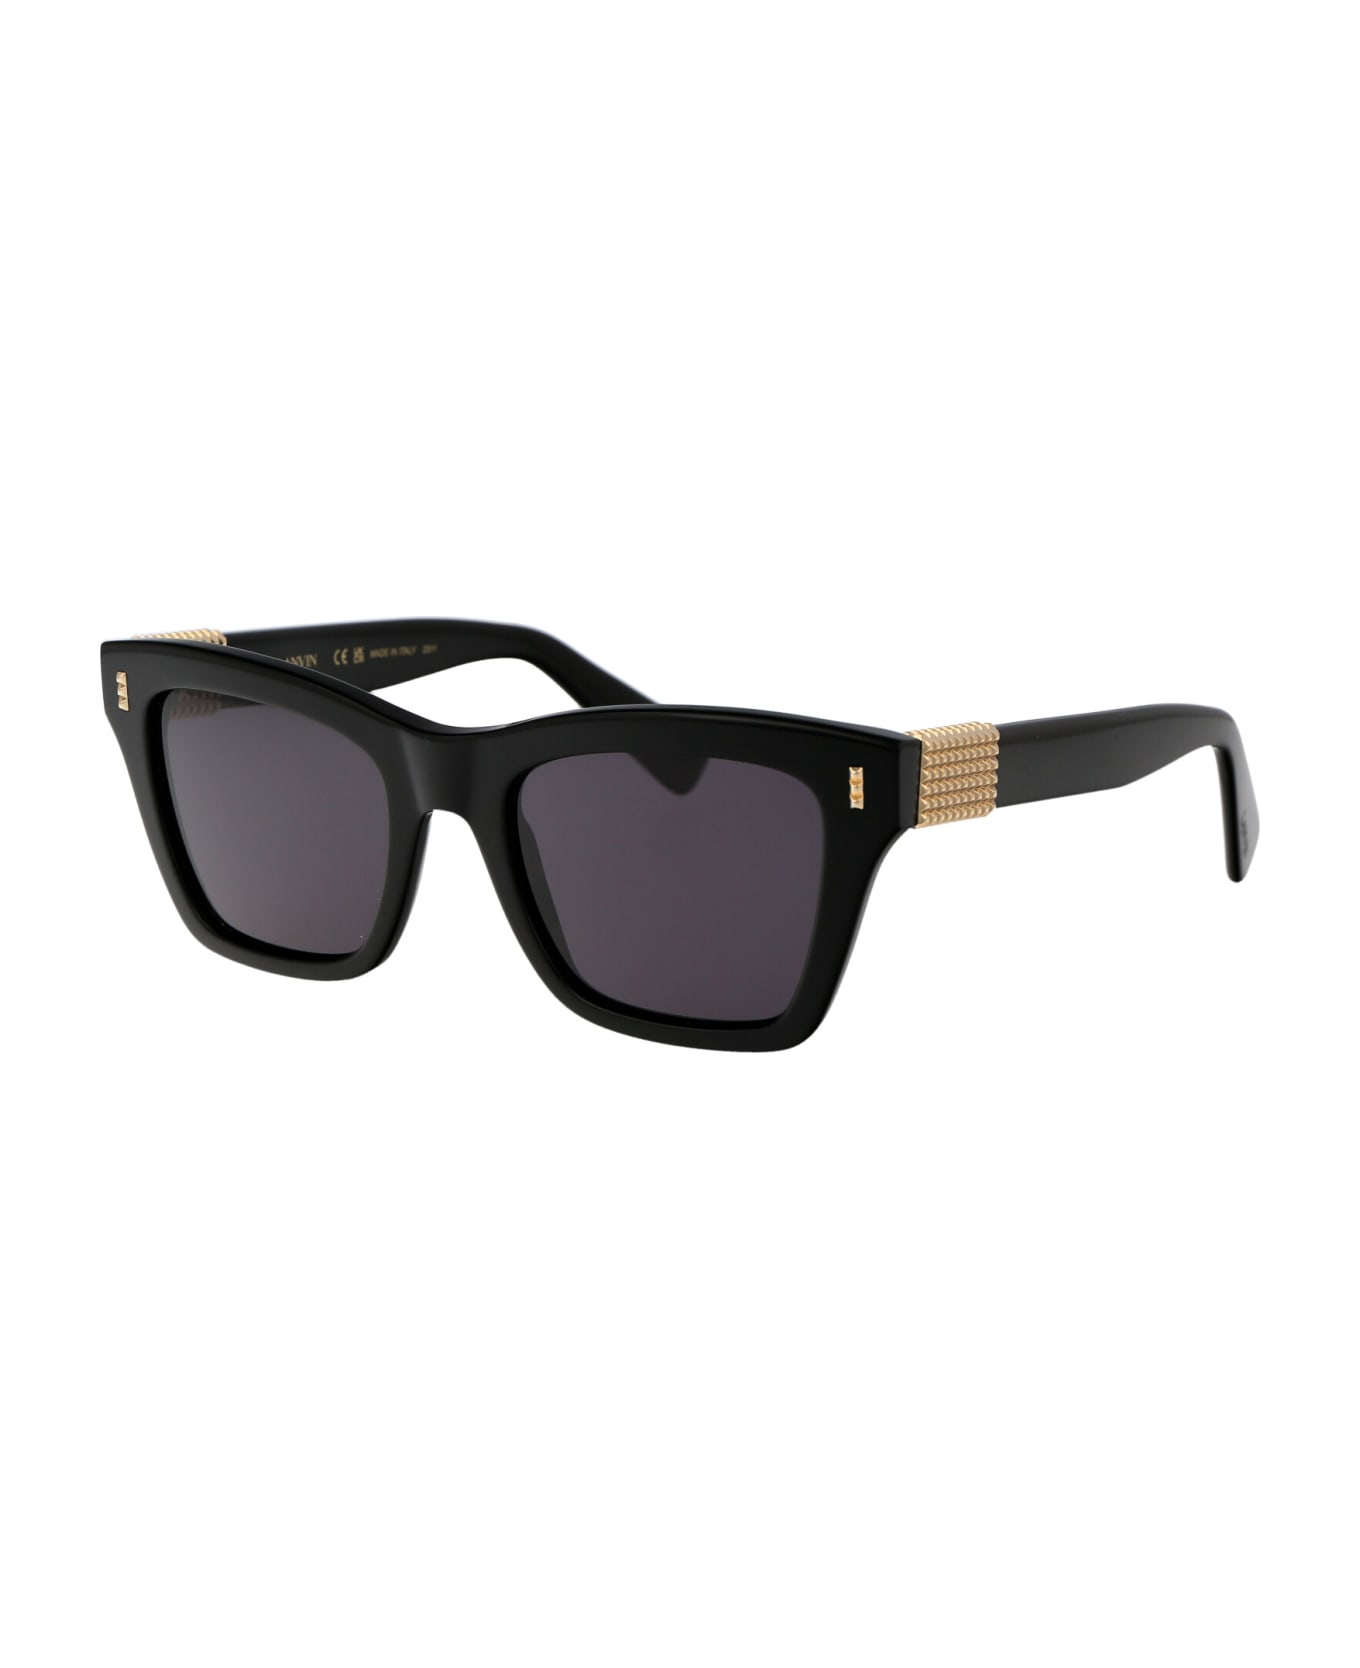 Lanvin Lnv668s Sunglasses - 001 BLACK サングラス